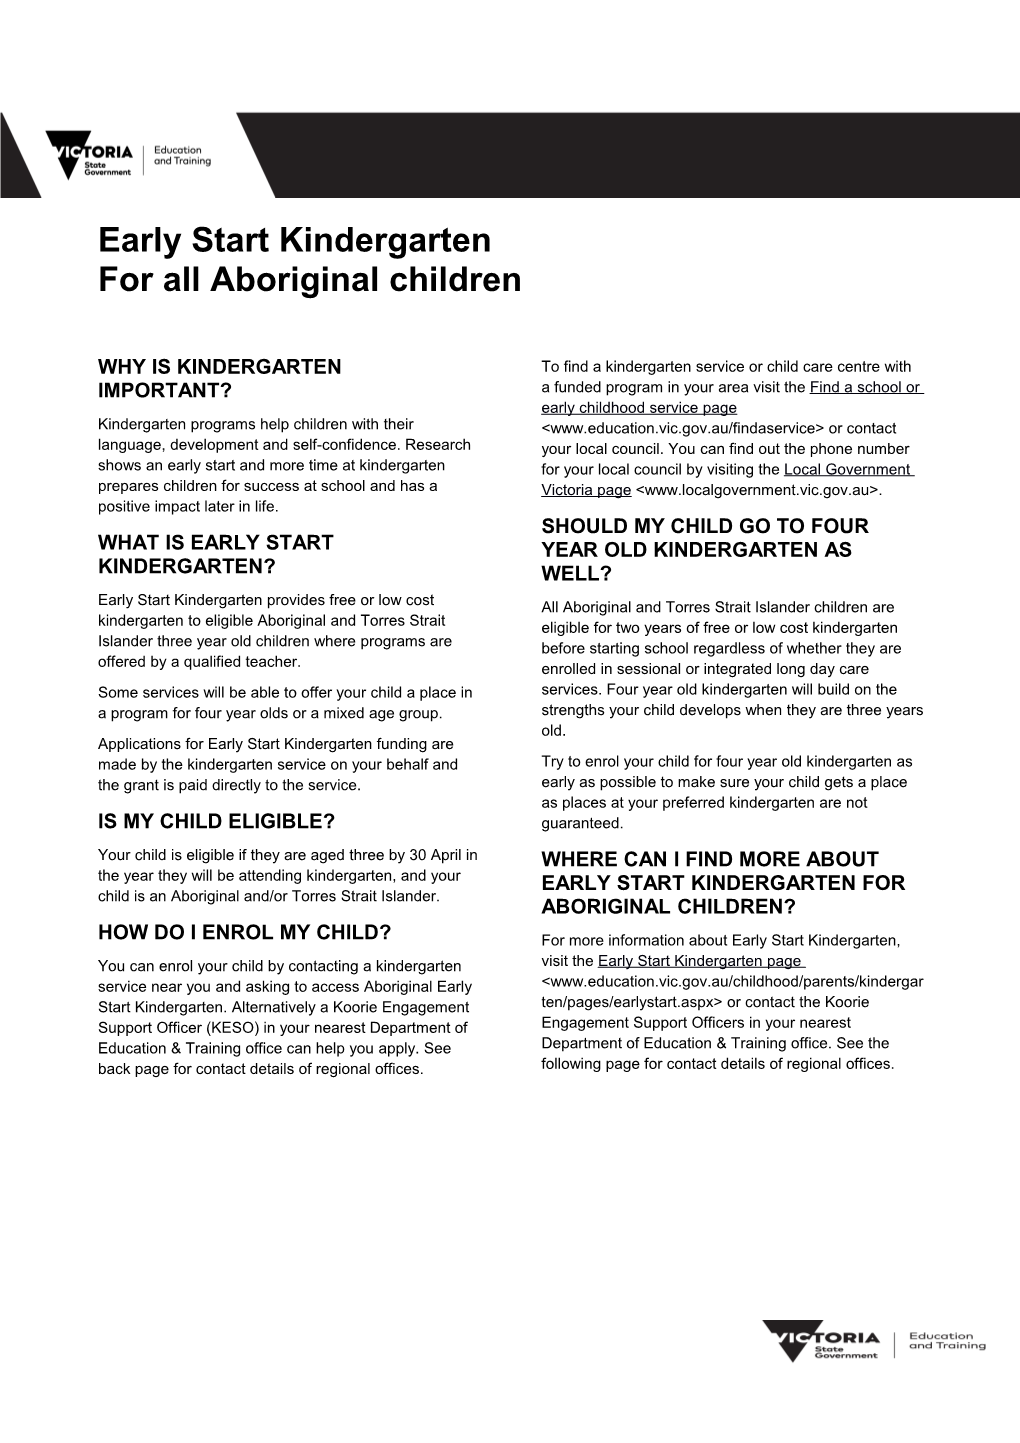 Early Start Kindergarten for All Aboriginal Children